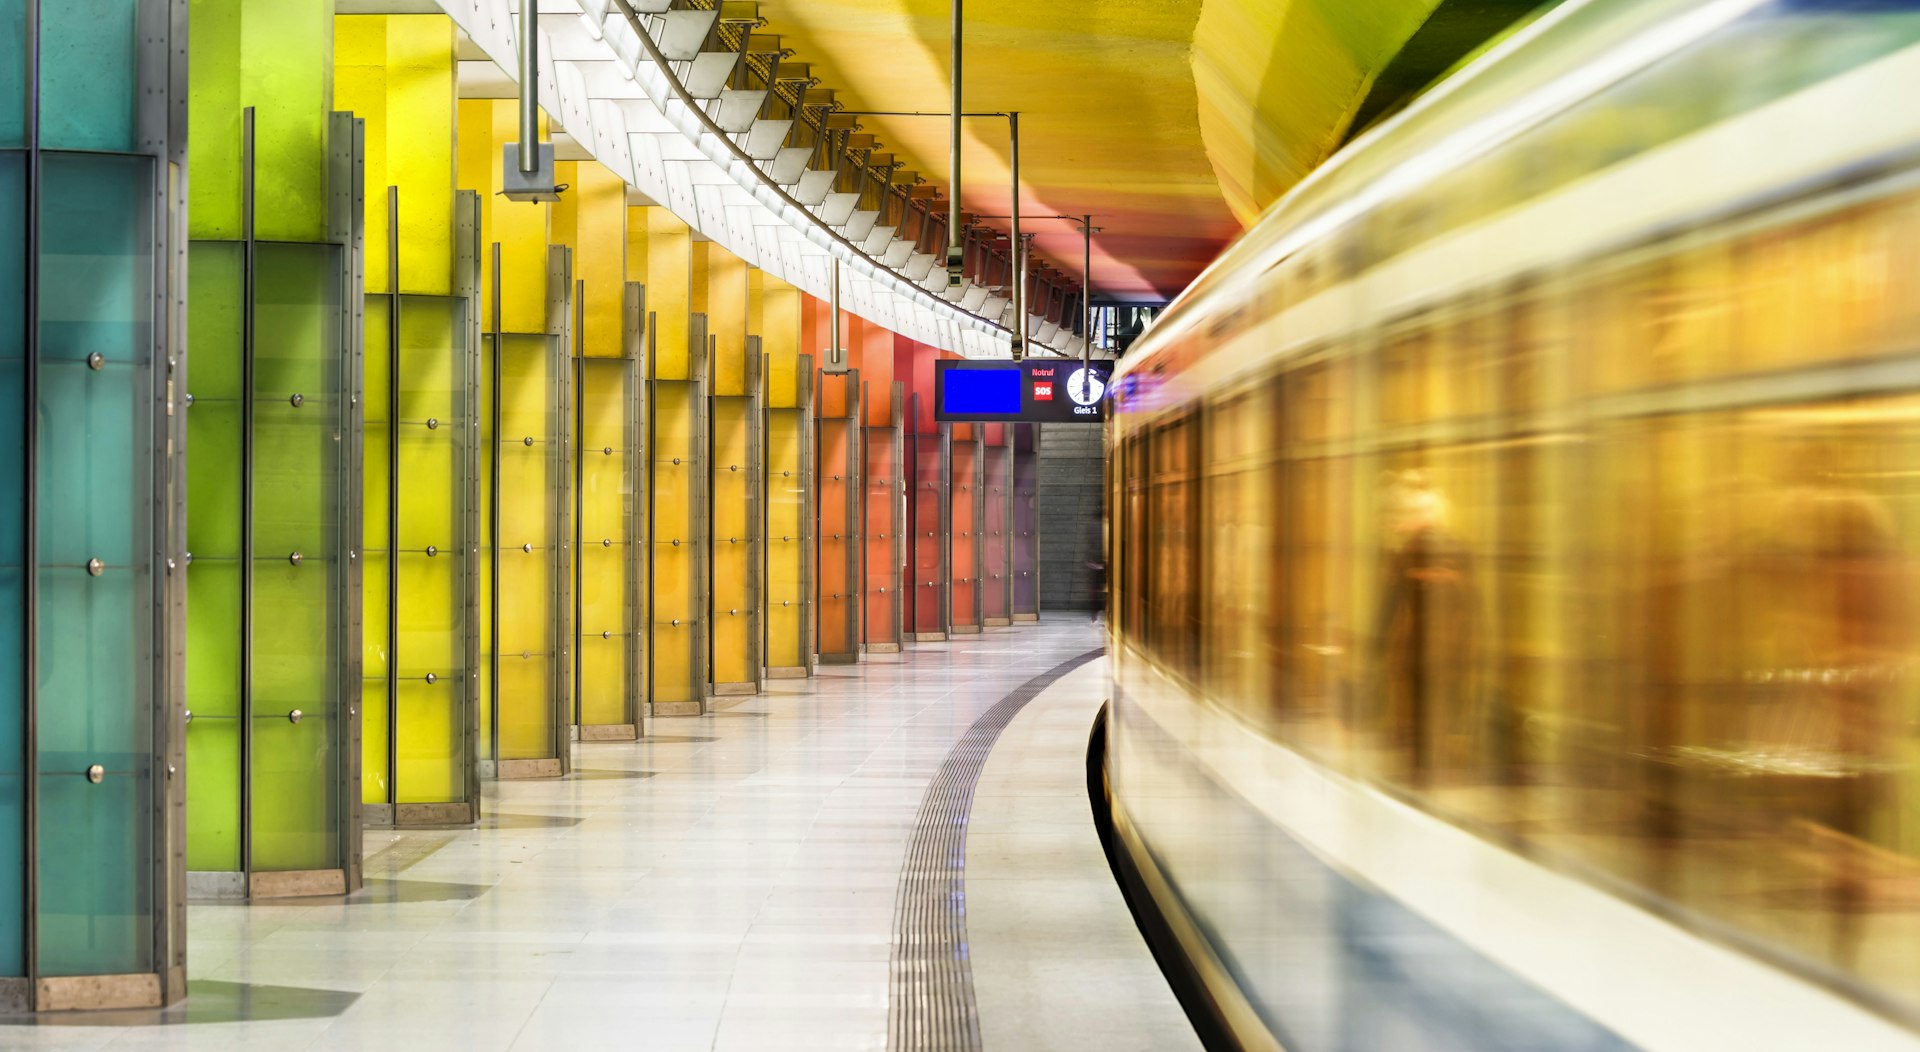 The colorful Candidplatz U-Bahn station in Munich, Germany